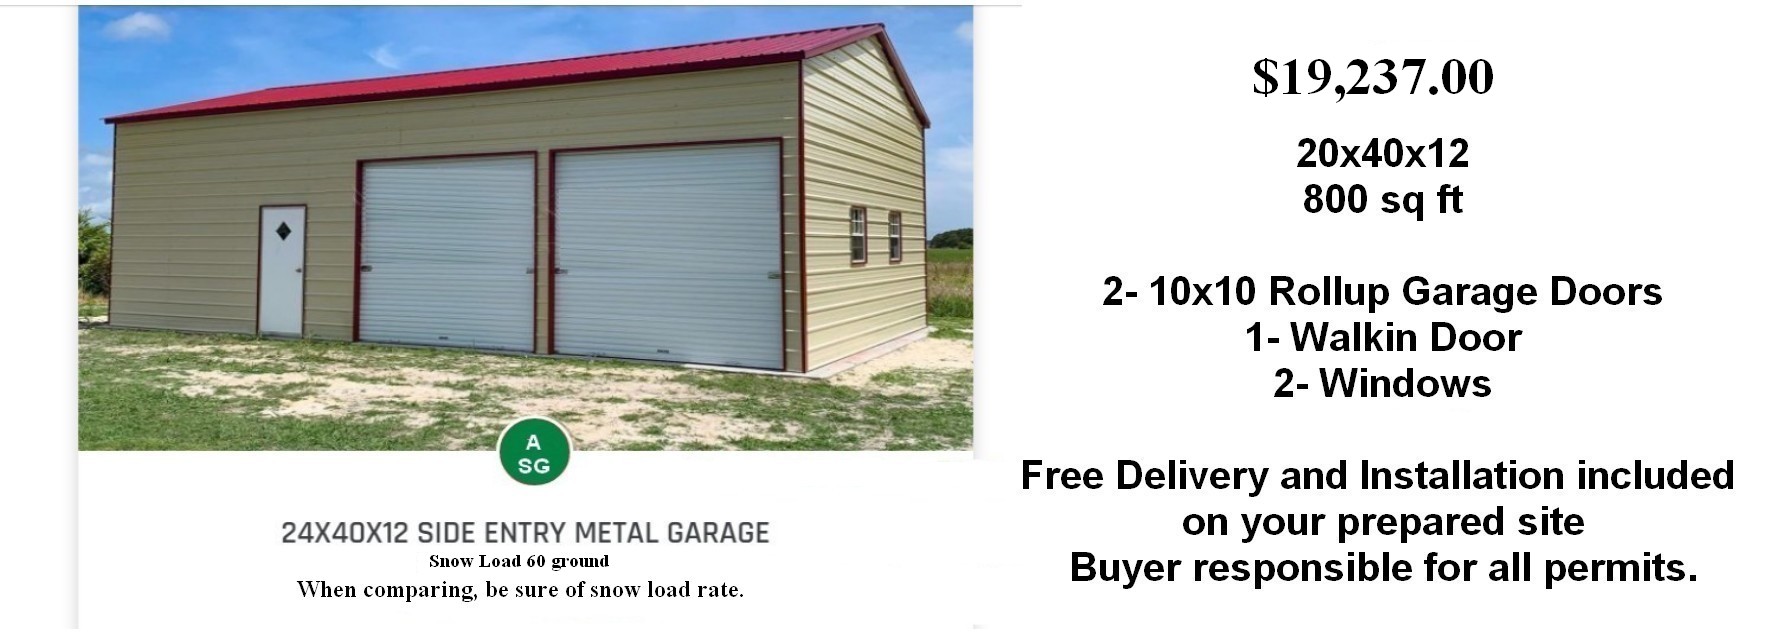 example 20x40x12 garage sample pricing